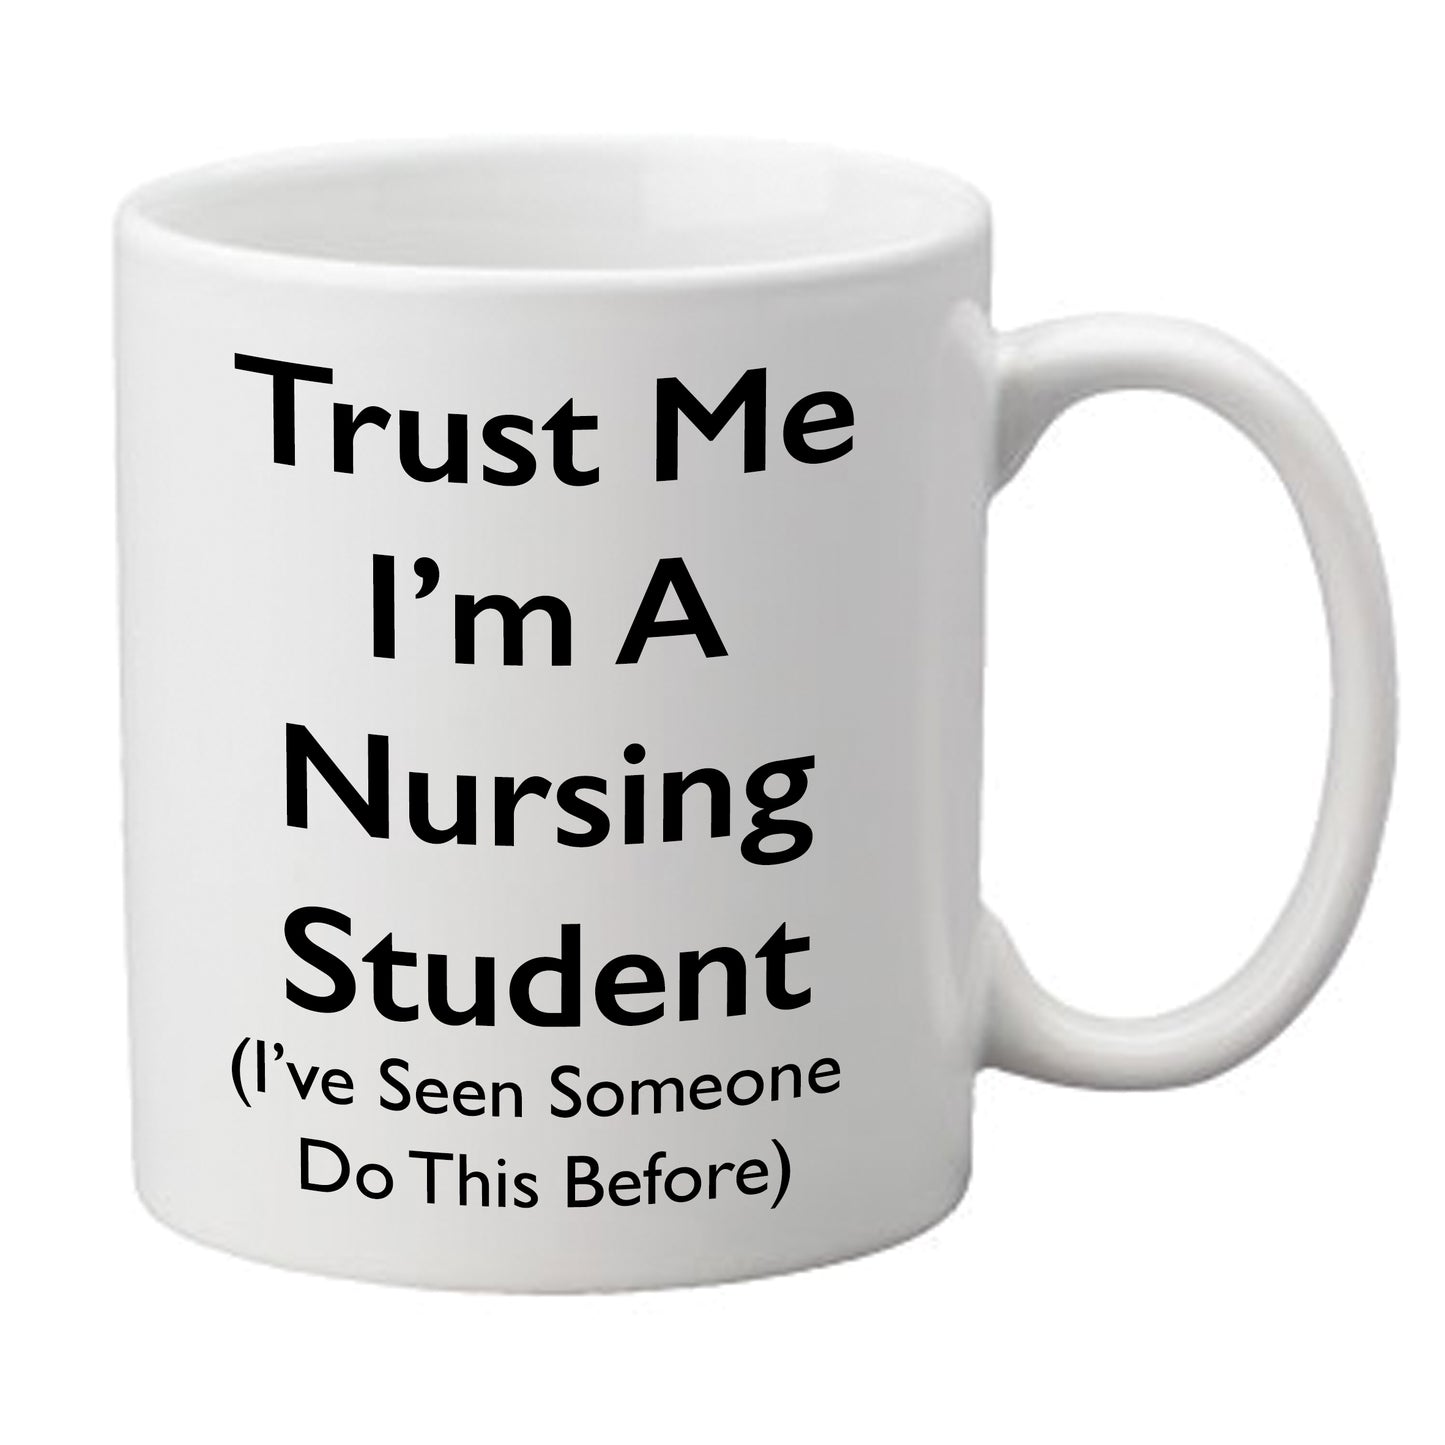 'Trust Me I'm a Nursing Student' Mug